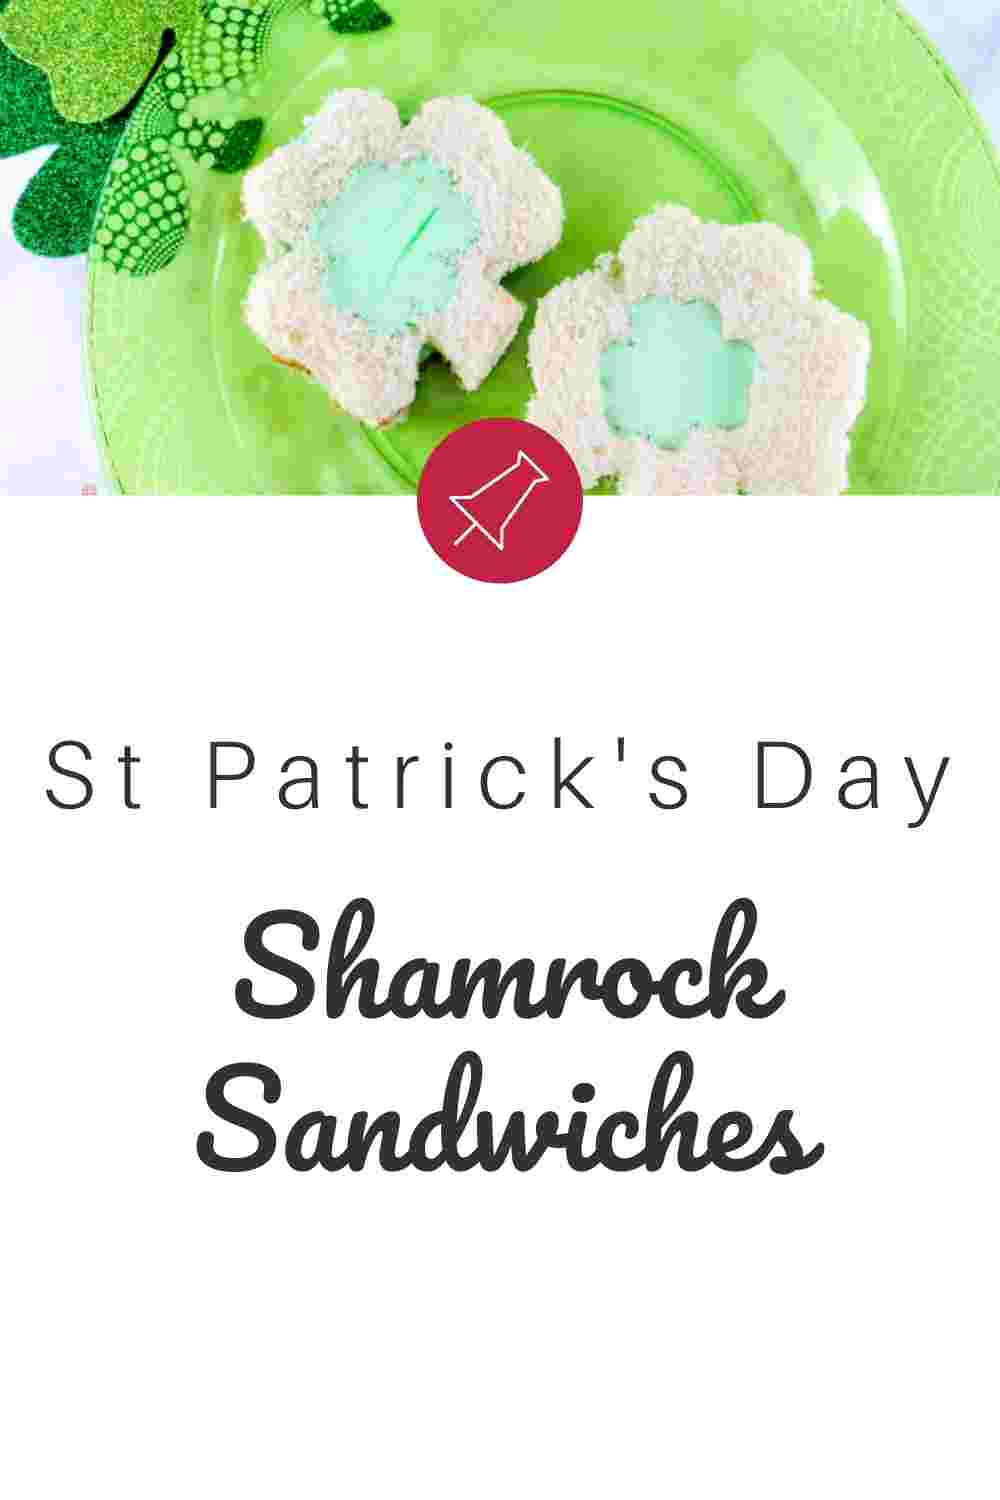 Shamrock Sandwiches for Saint Patrick's Day